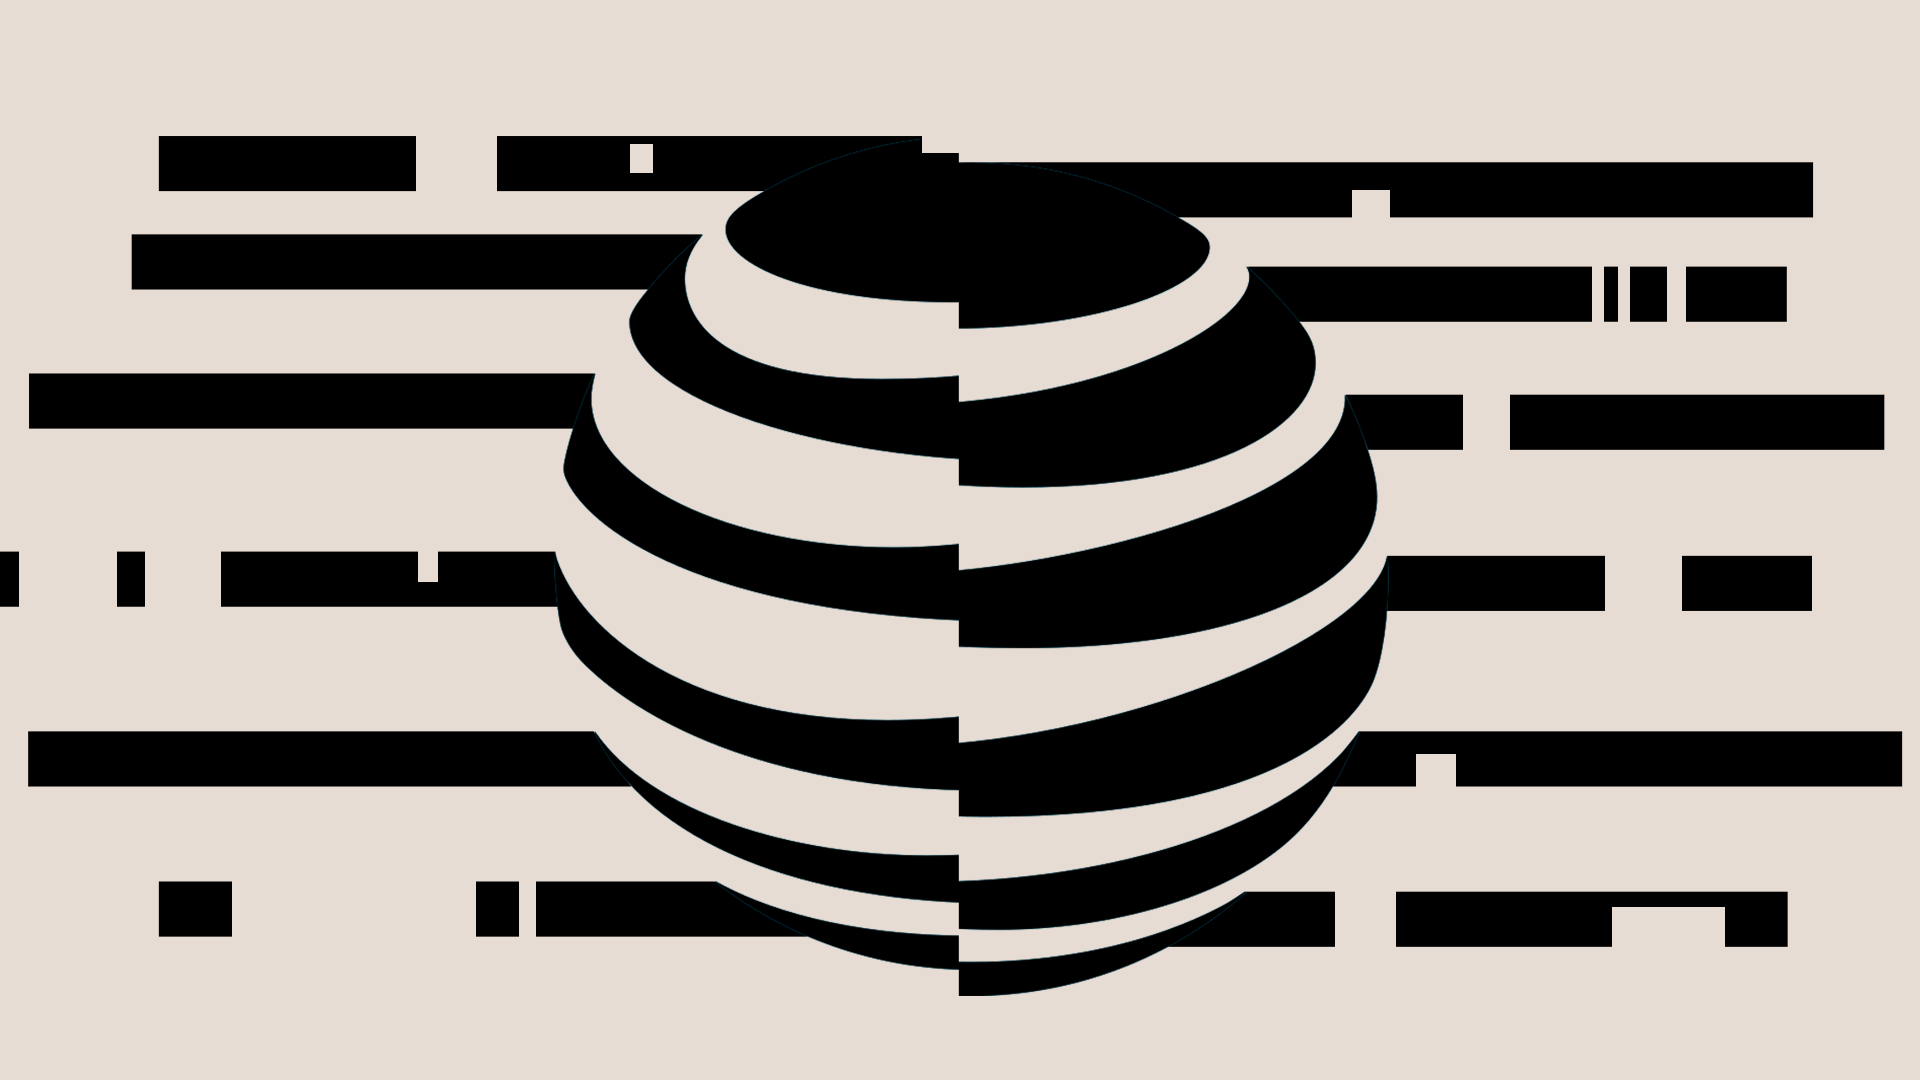 An illustration of AT&T logo